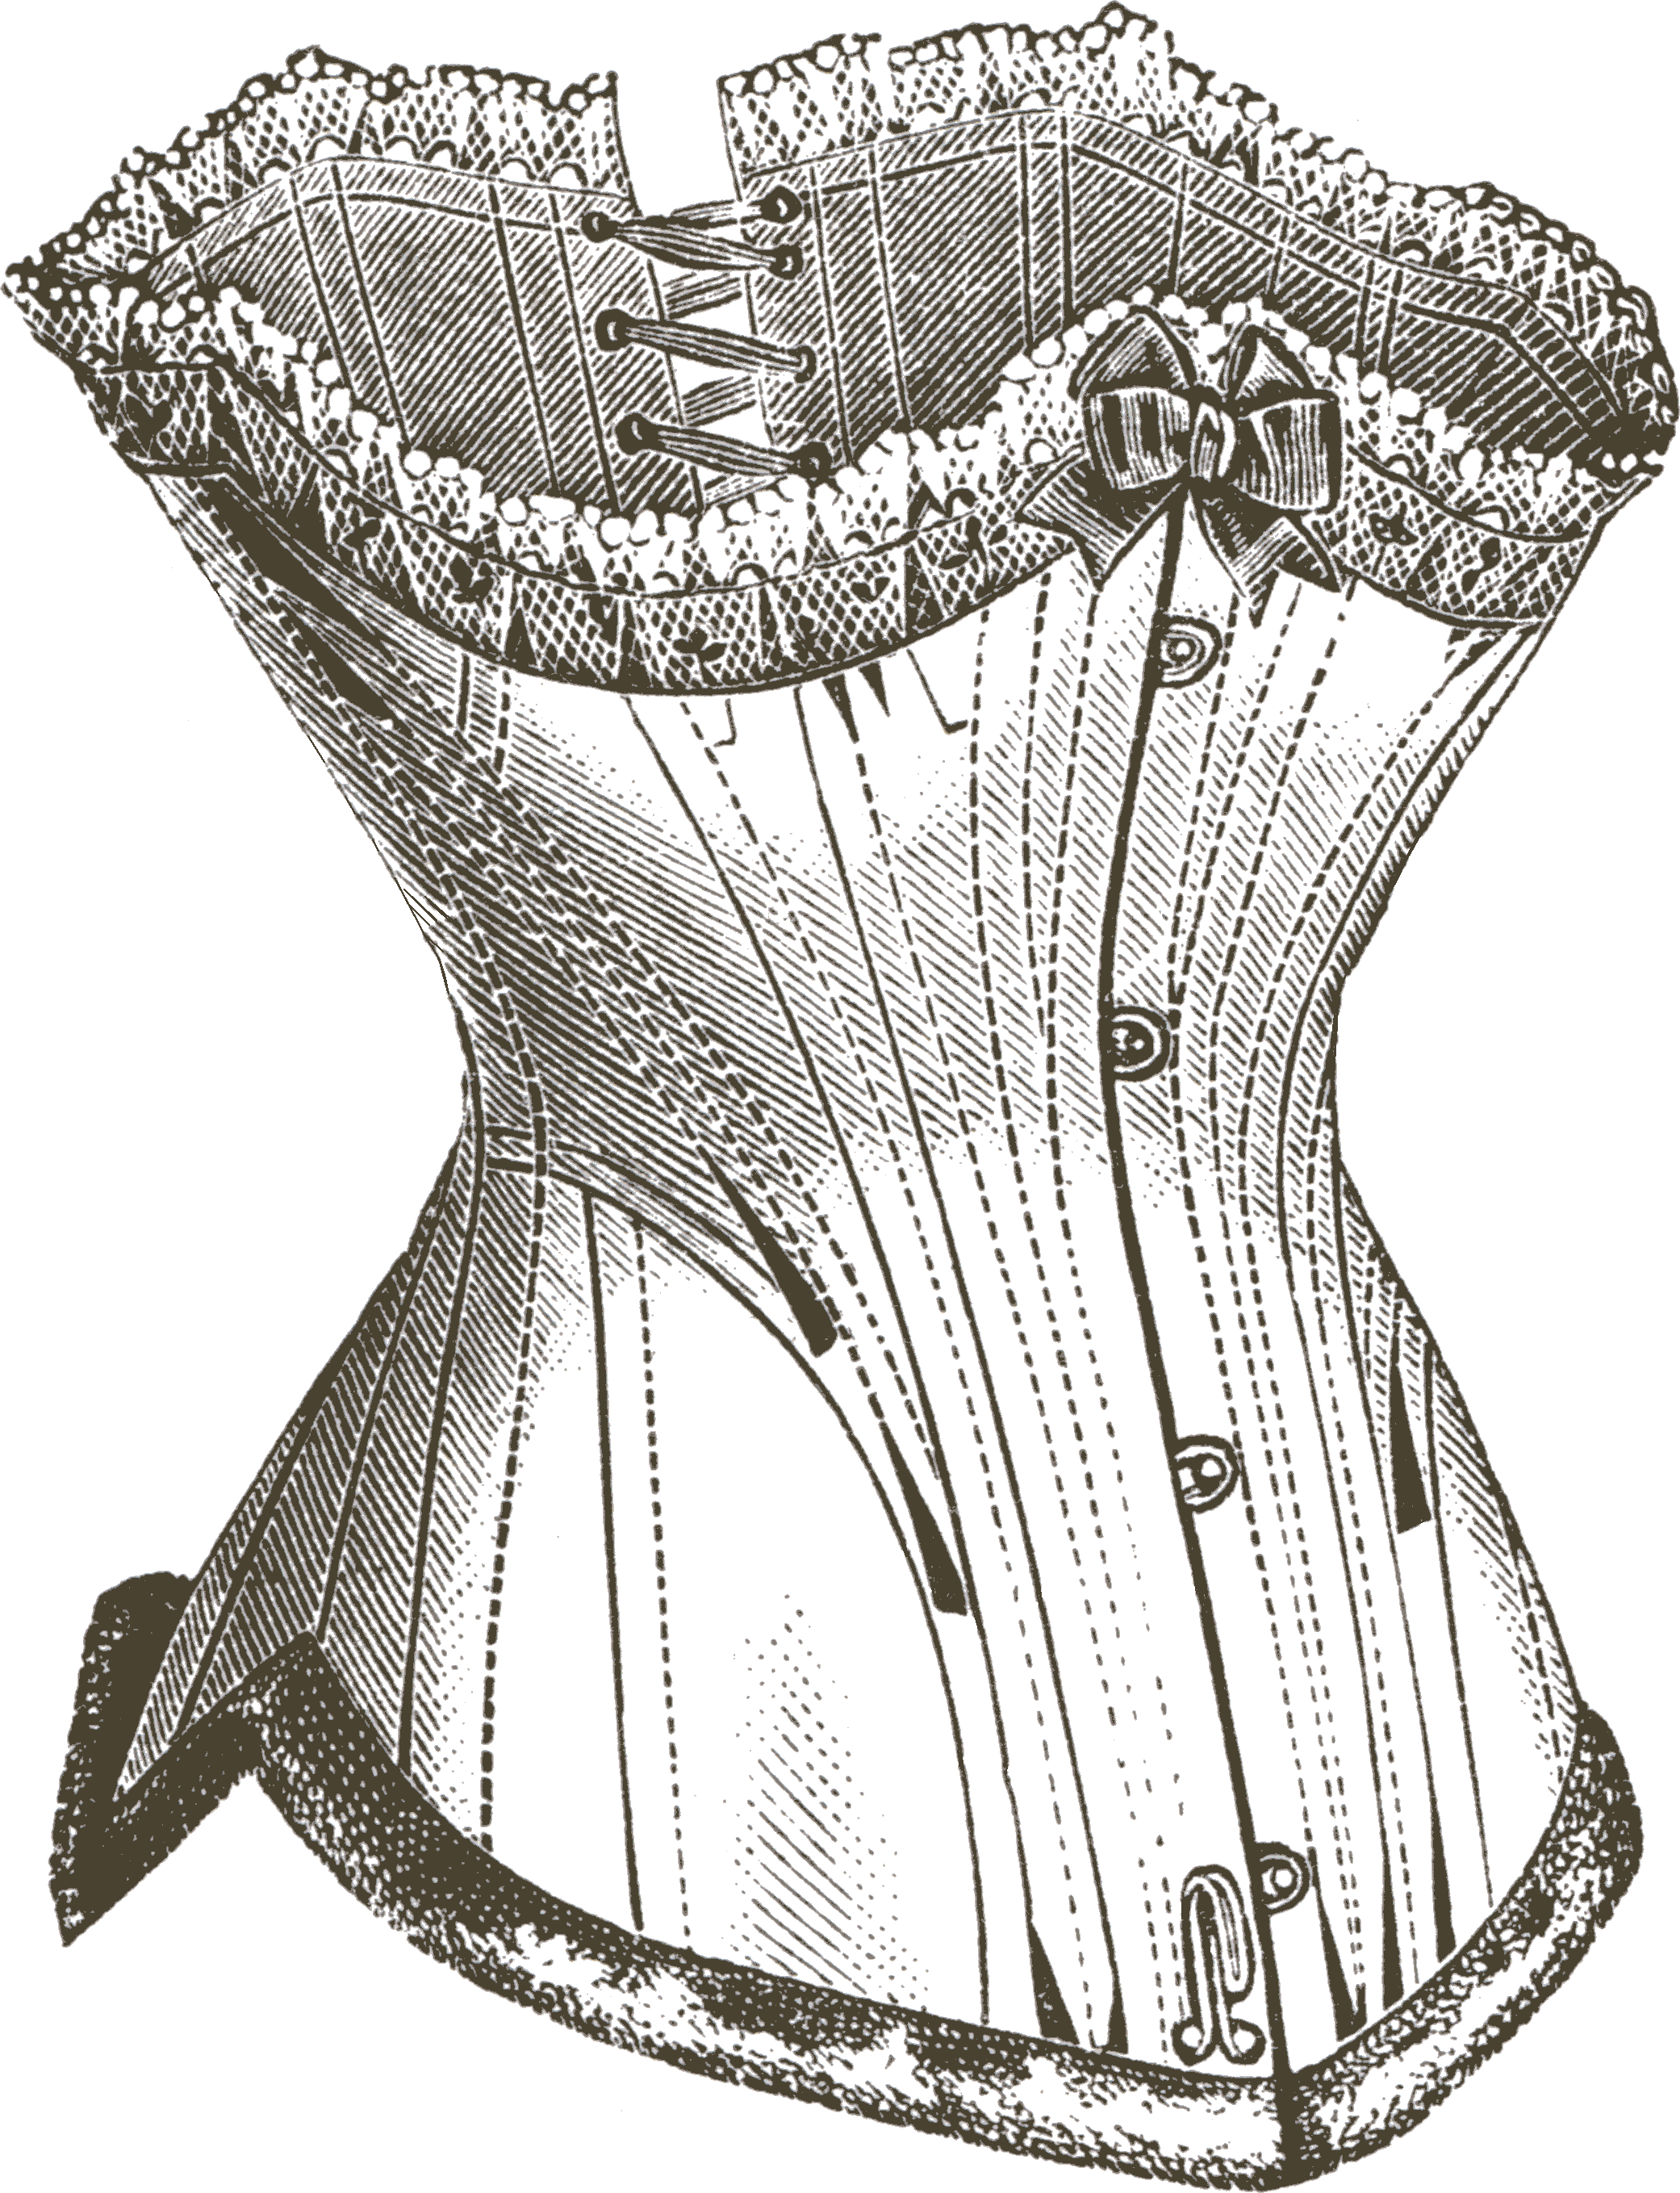 Women's Undergarments: Corsets, Girdles, Brassieres, Oh My! - Willamette  Heritage Center